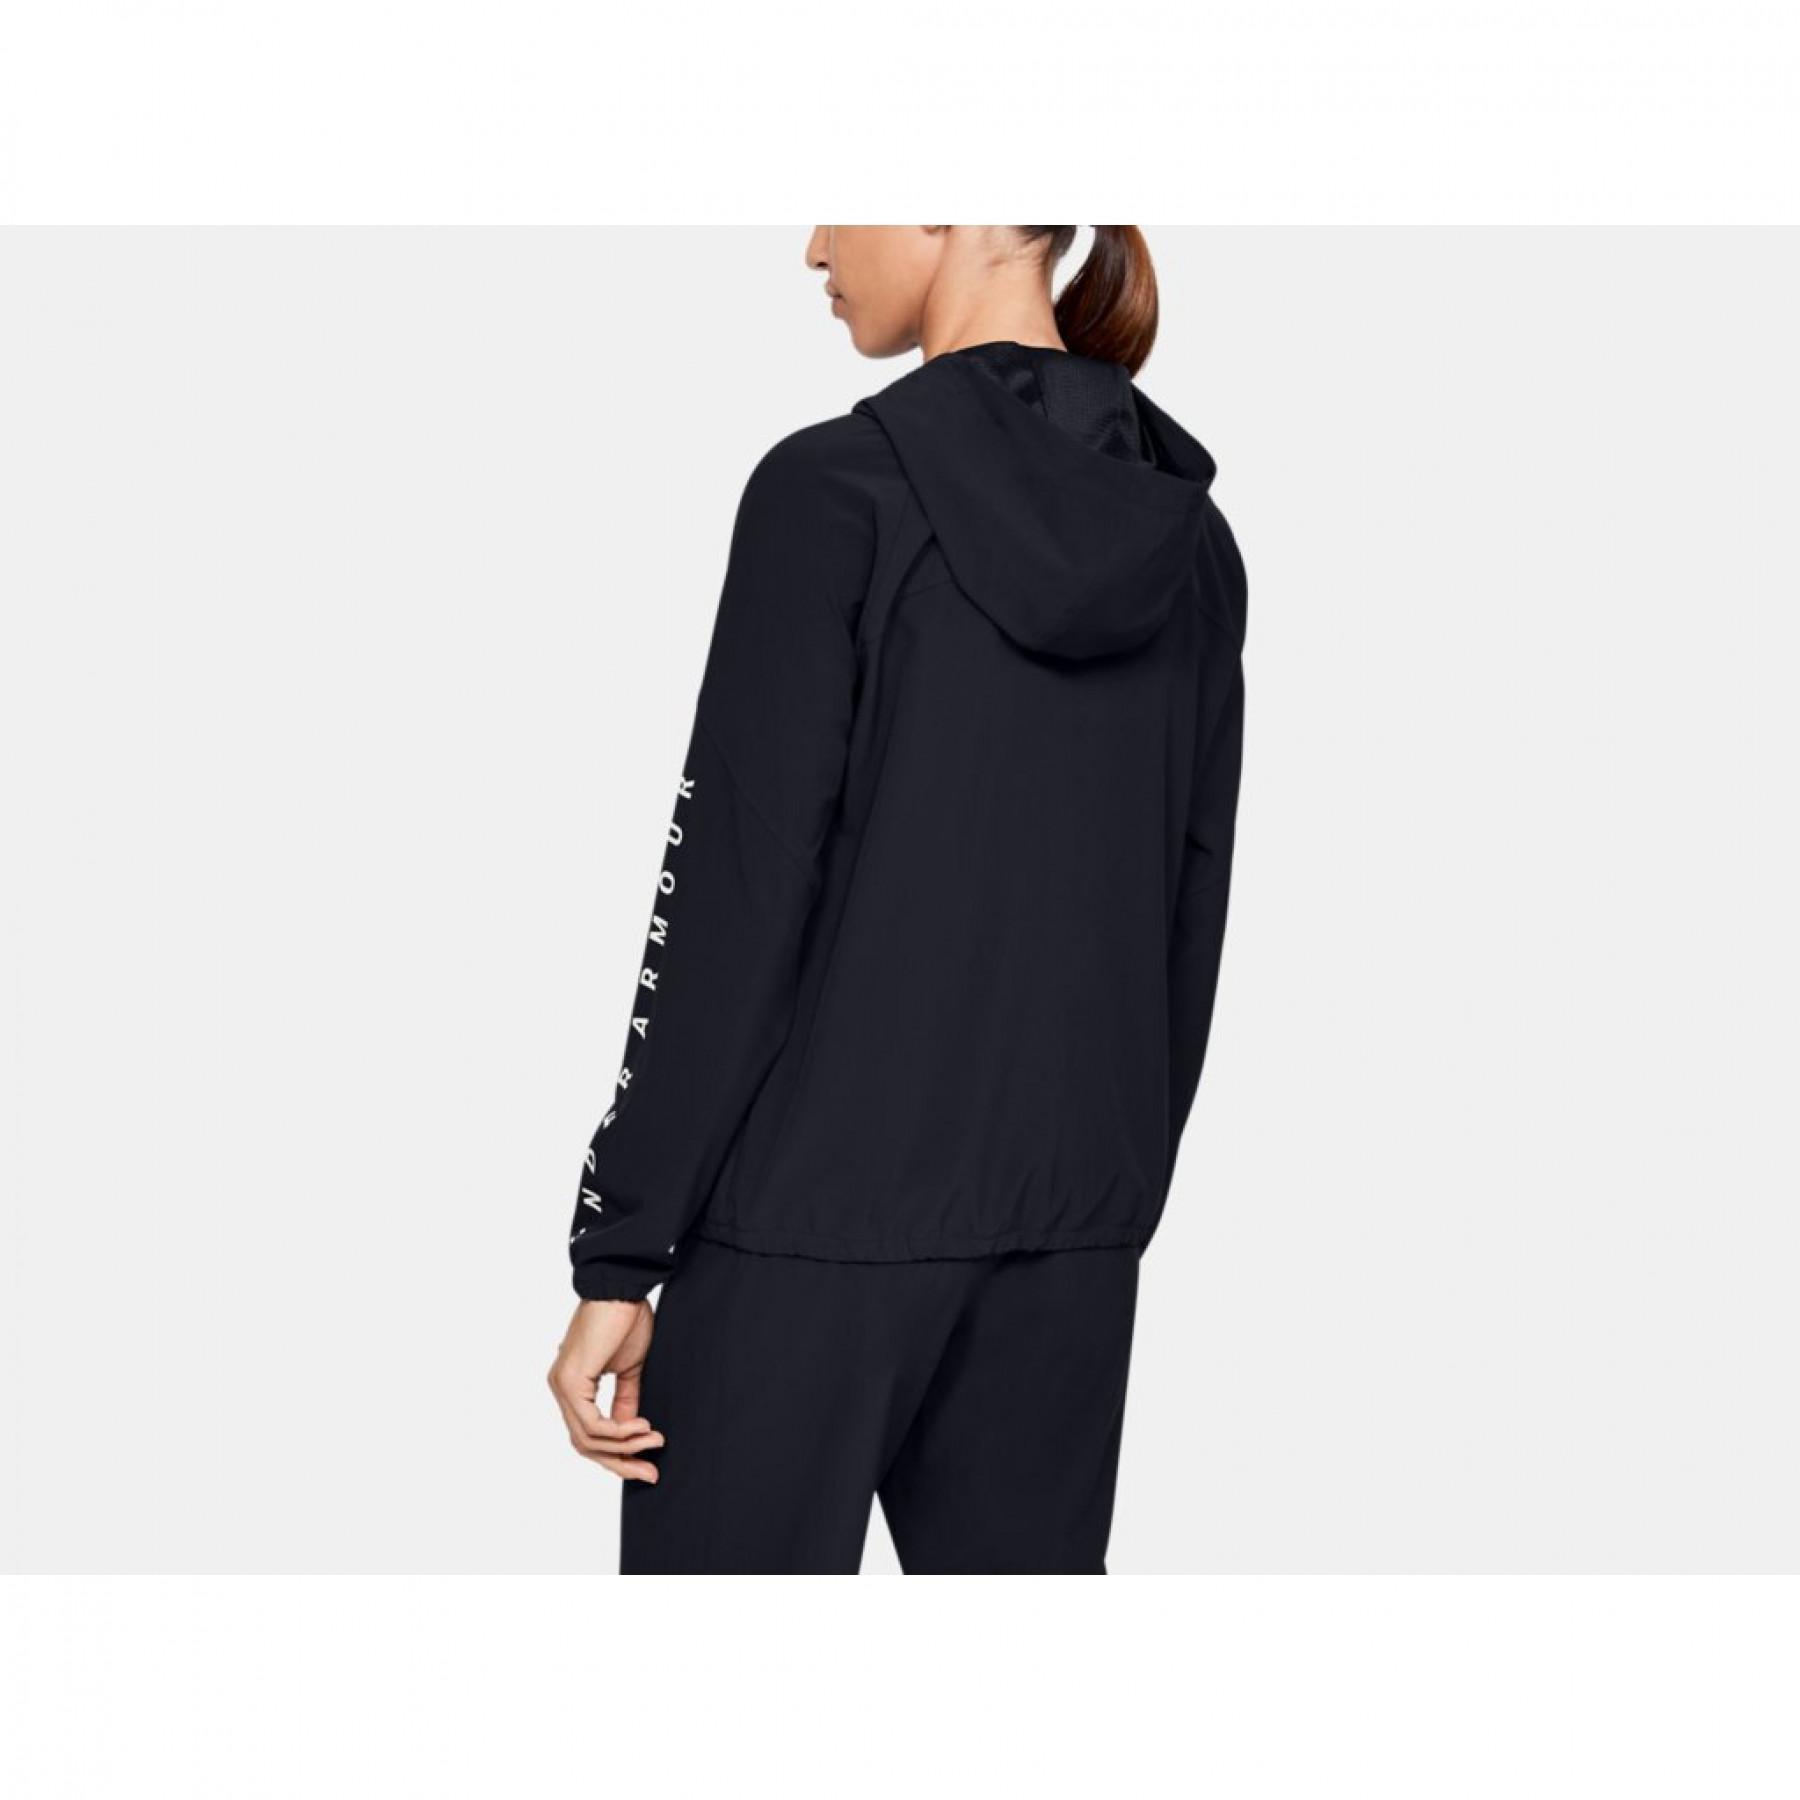 Women's hoodie Under Armour Woven Branded Full Zip